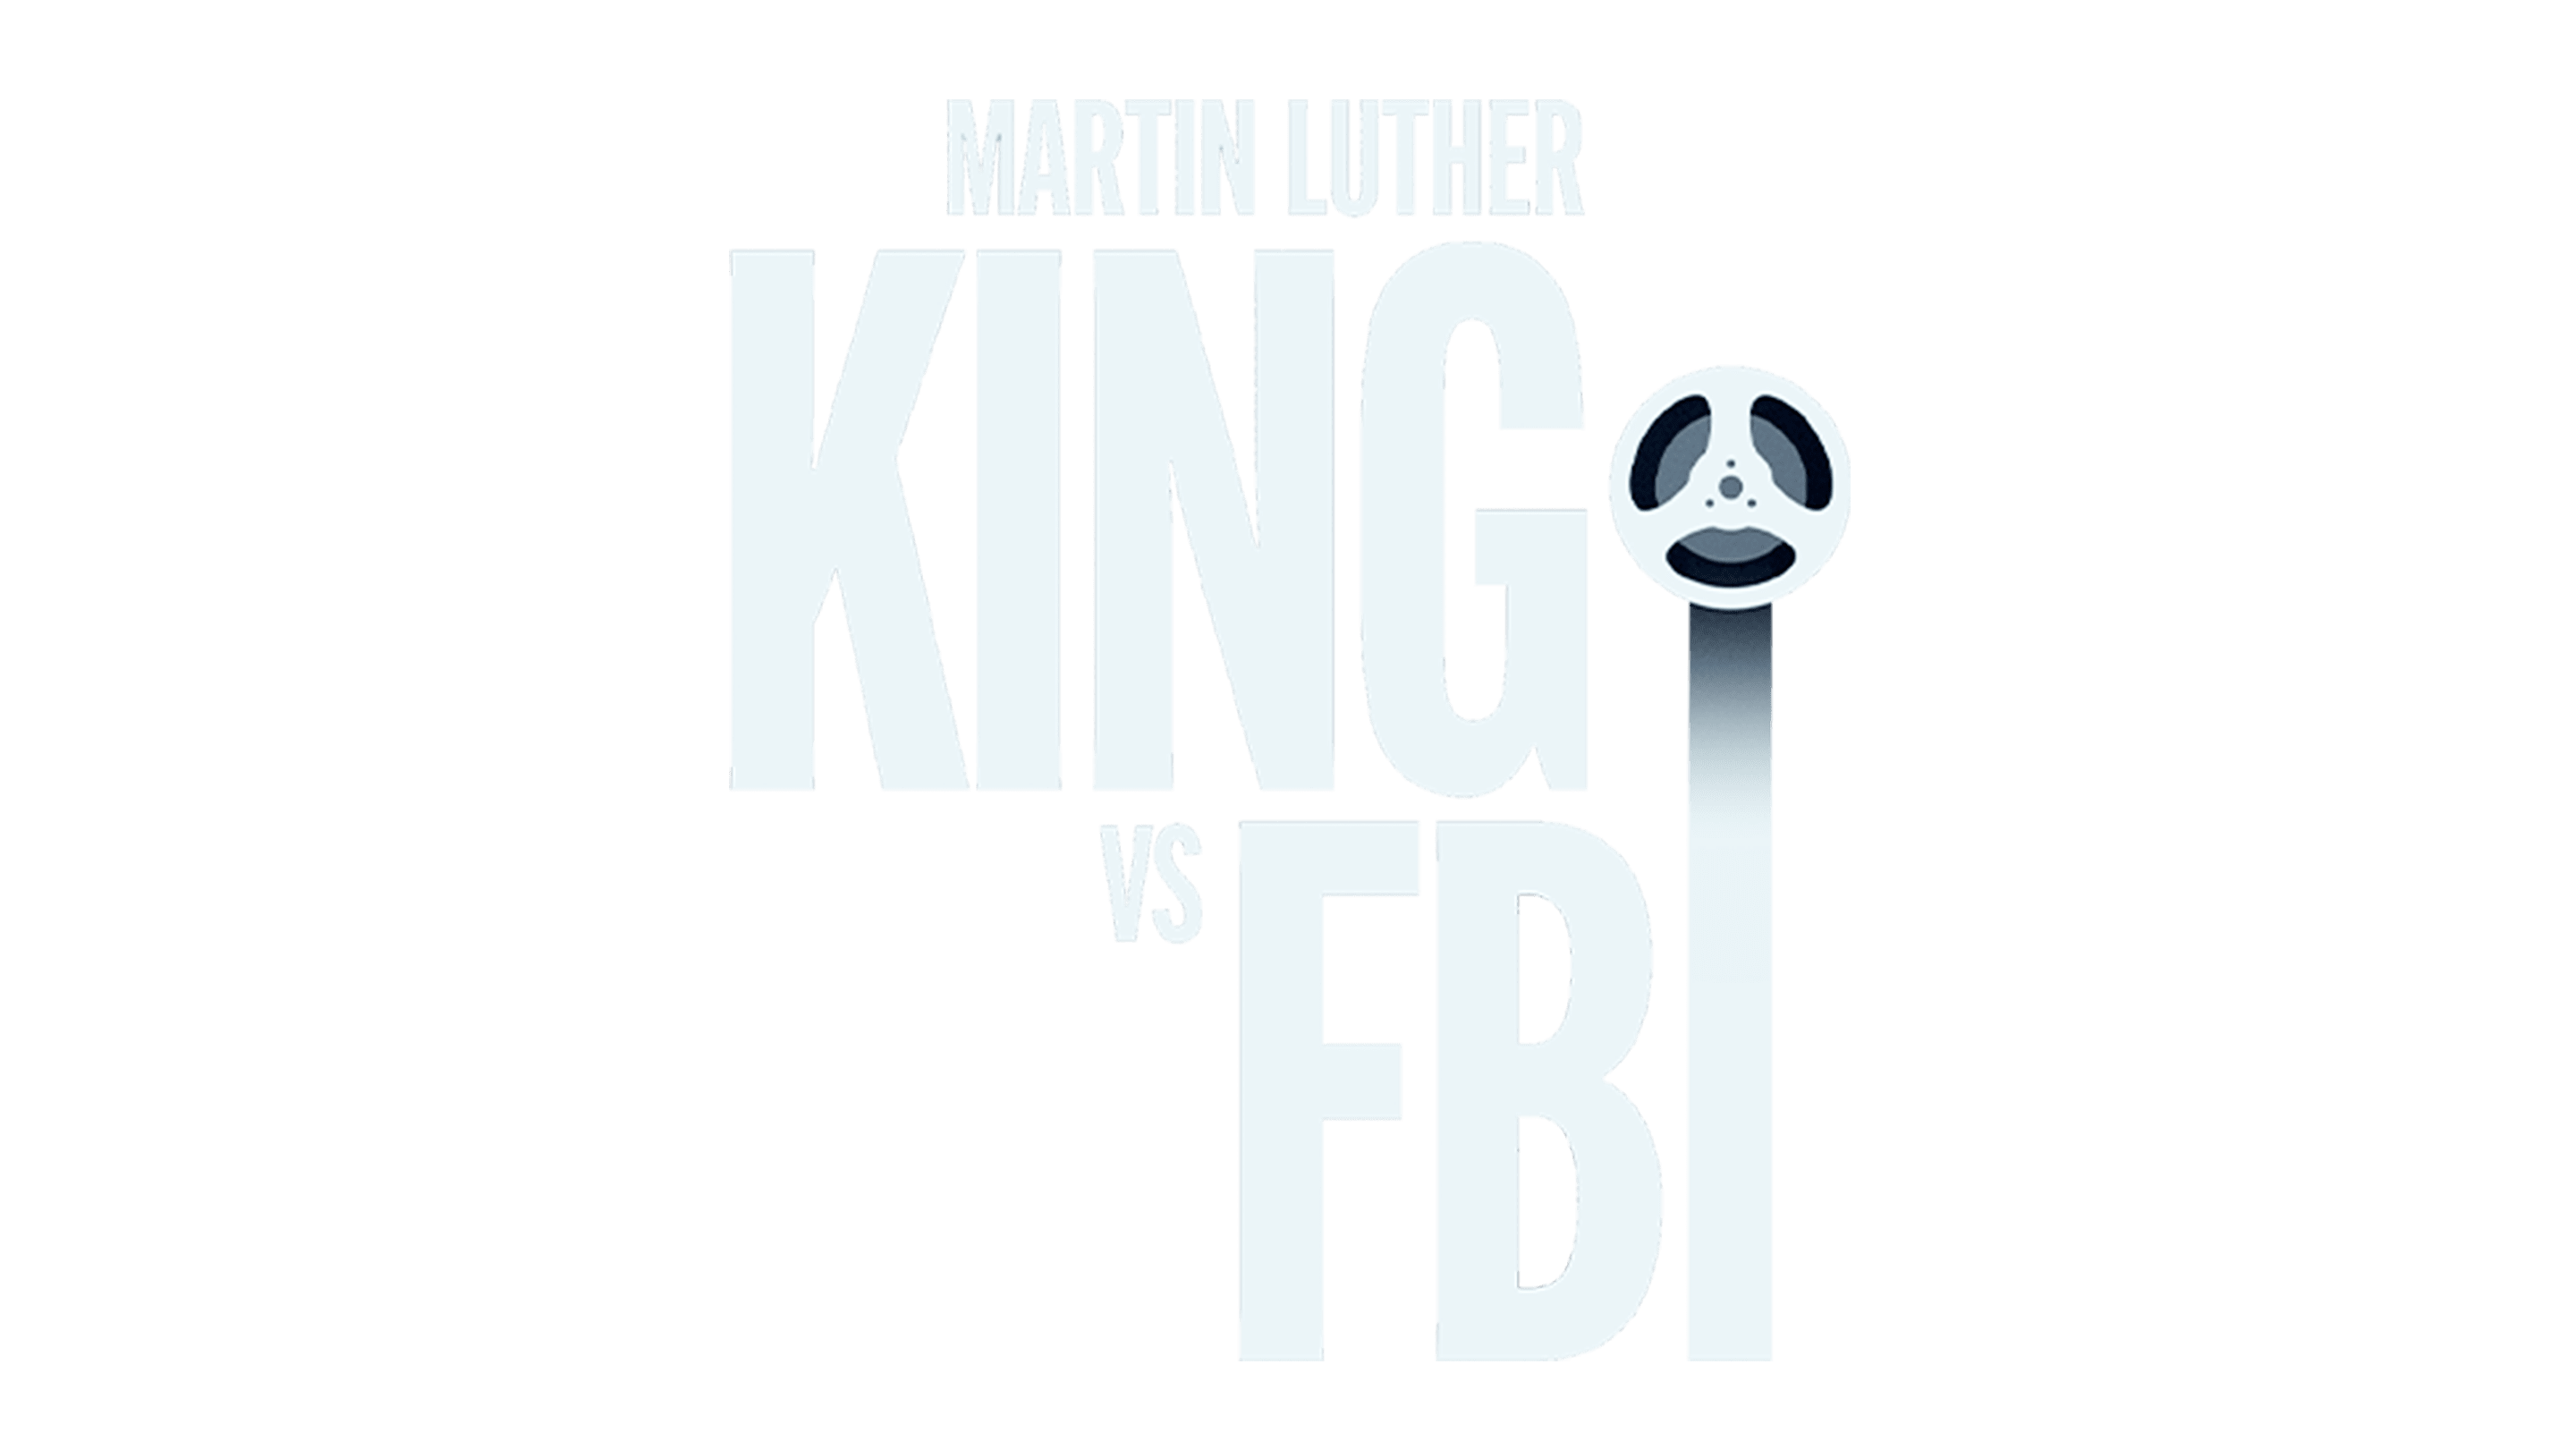 Martin Luther King vs. FBI